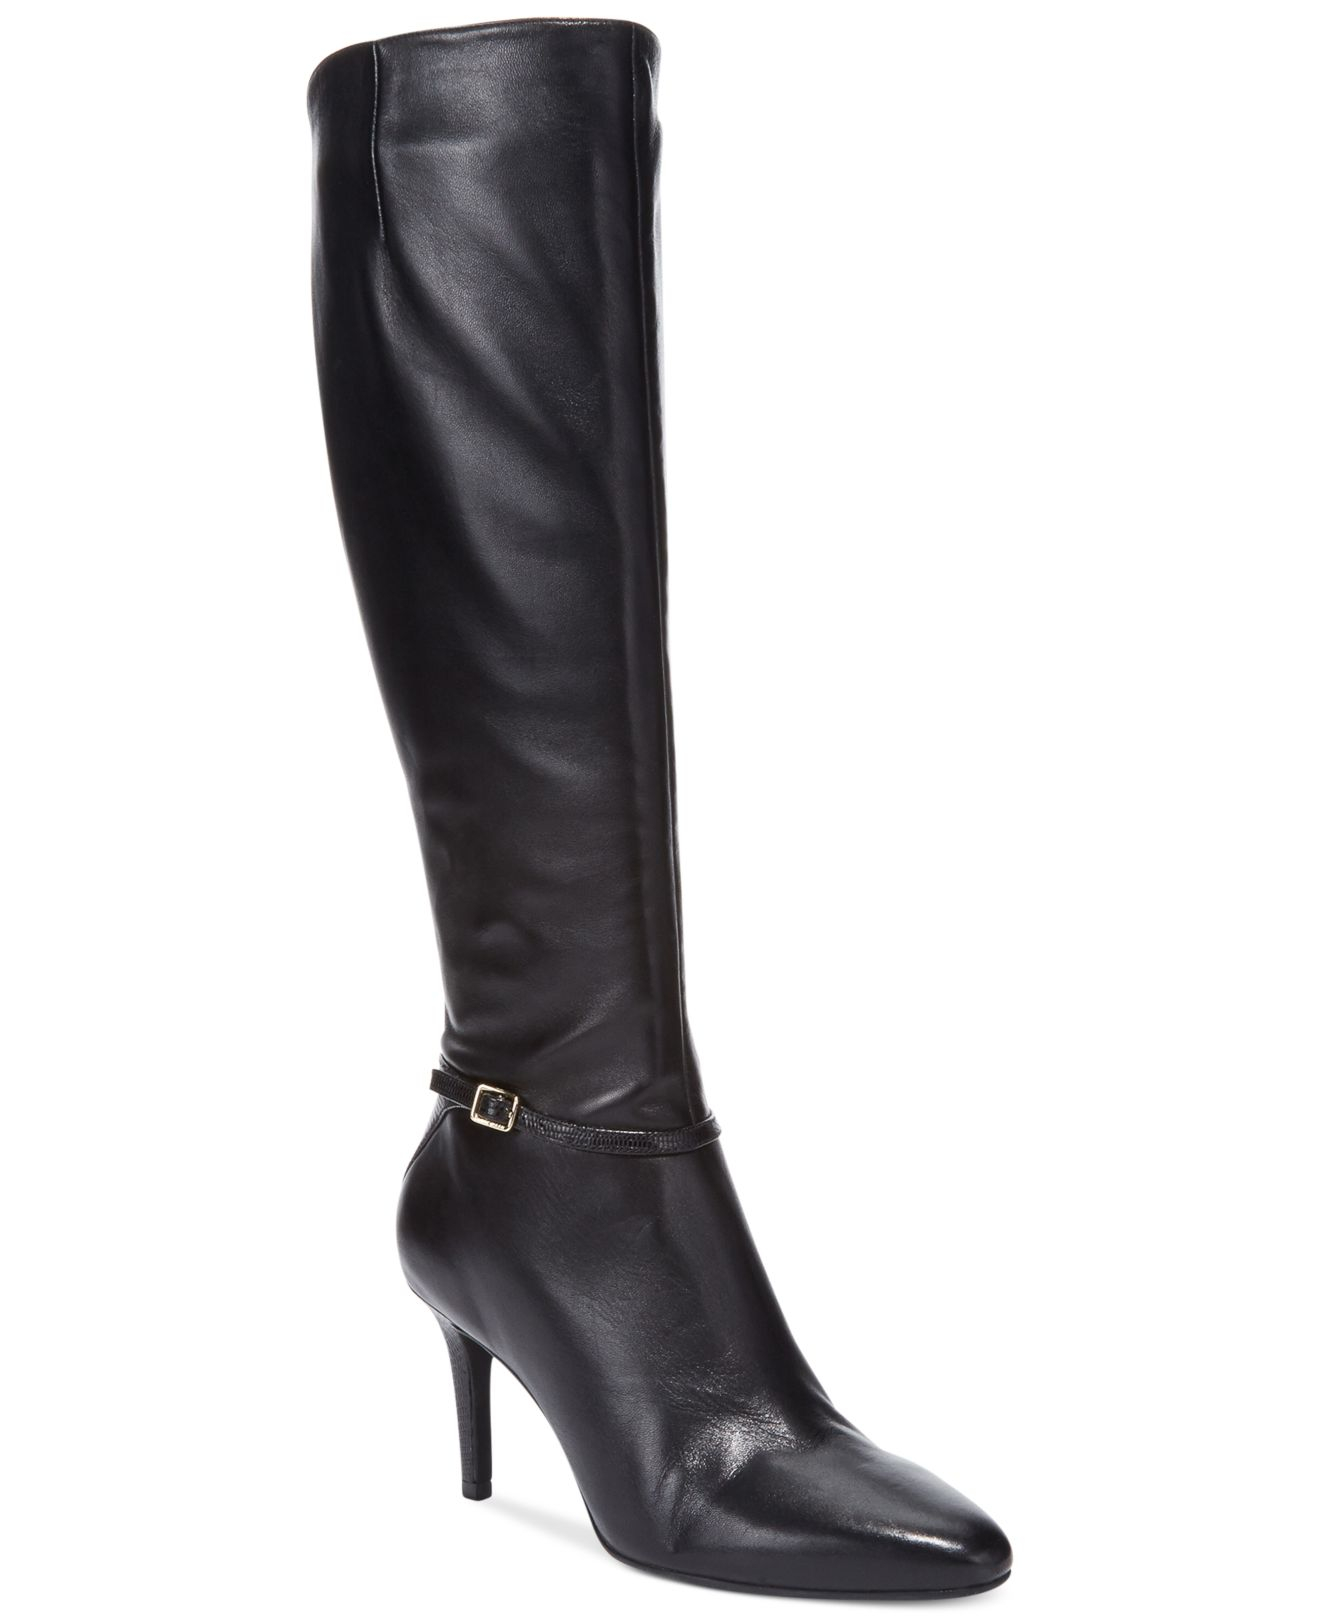 Lyst - Cole Haan Women'S Garner Wide Calf Tall Dress Boots in Black